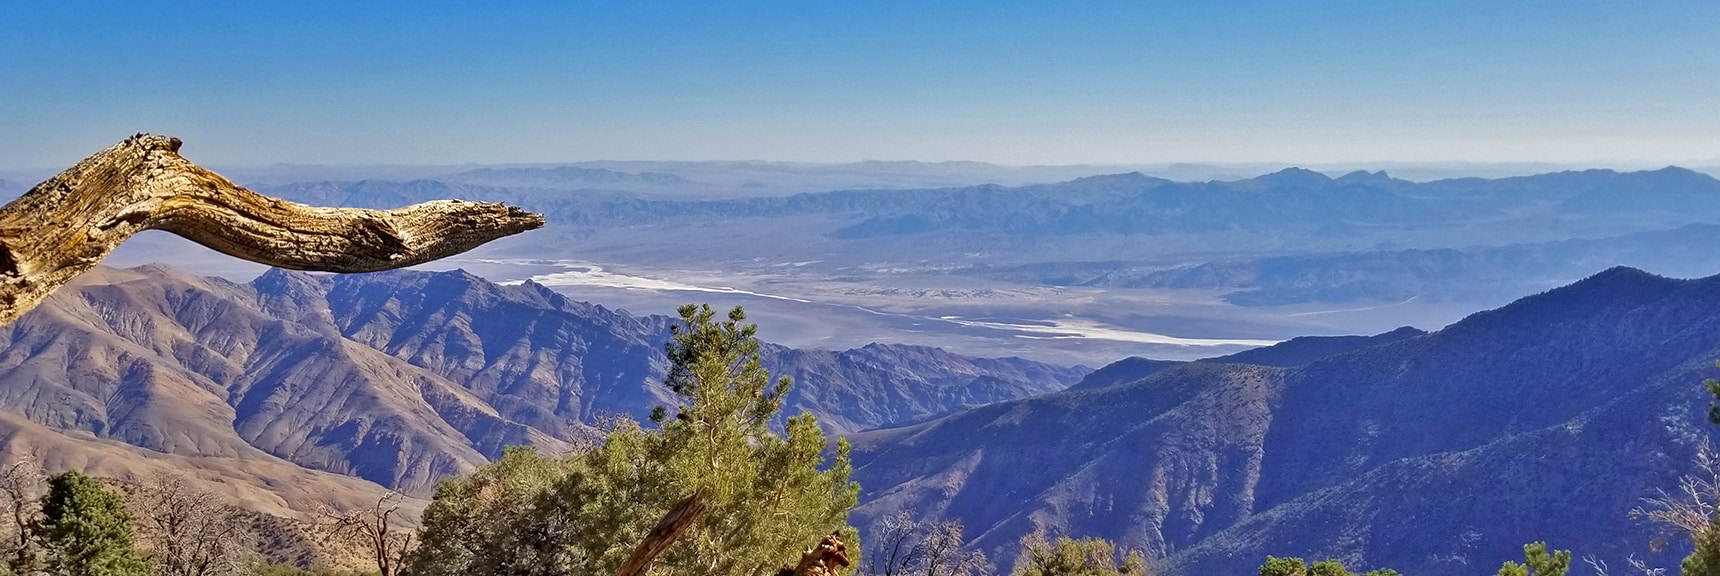 Death Valley (Furnace Creek Area Center) from Wildrose Peak Summit Ascent | Wildrose Peak | Panamint Mountain Range | Death Valley National Park, California